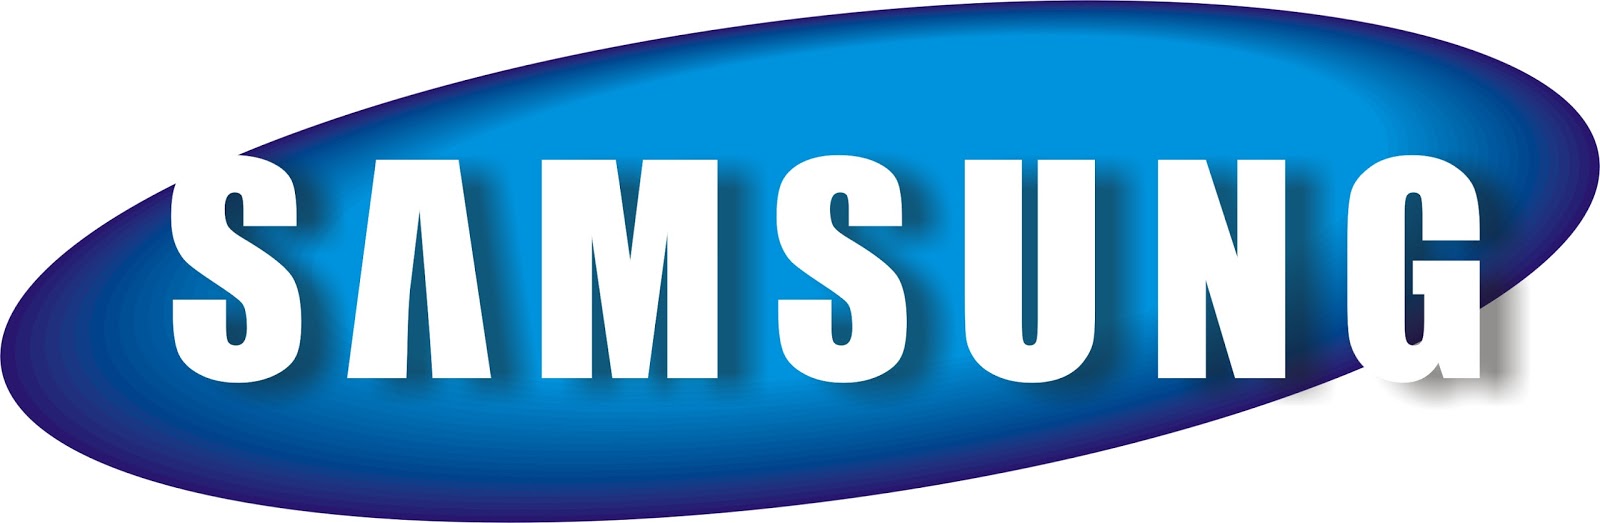 Samsung HD PNG - 94256